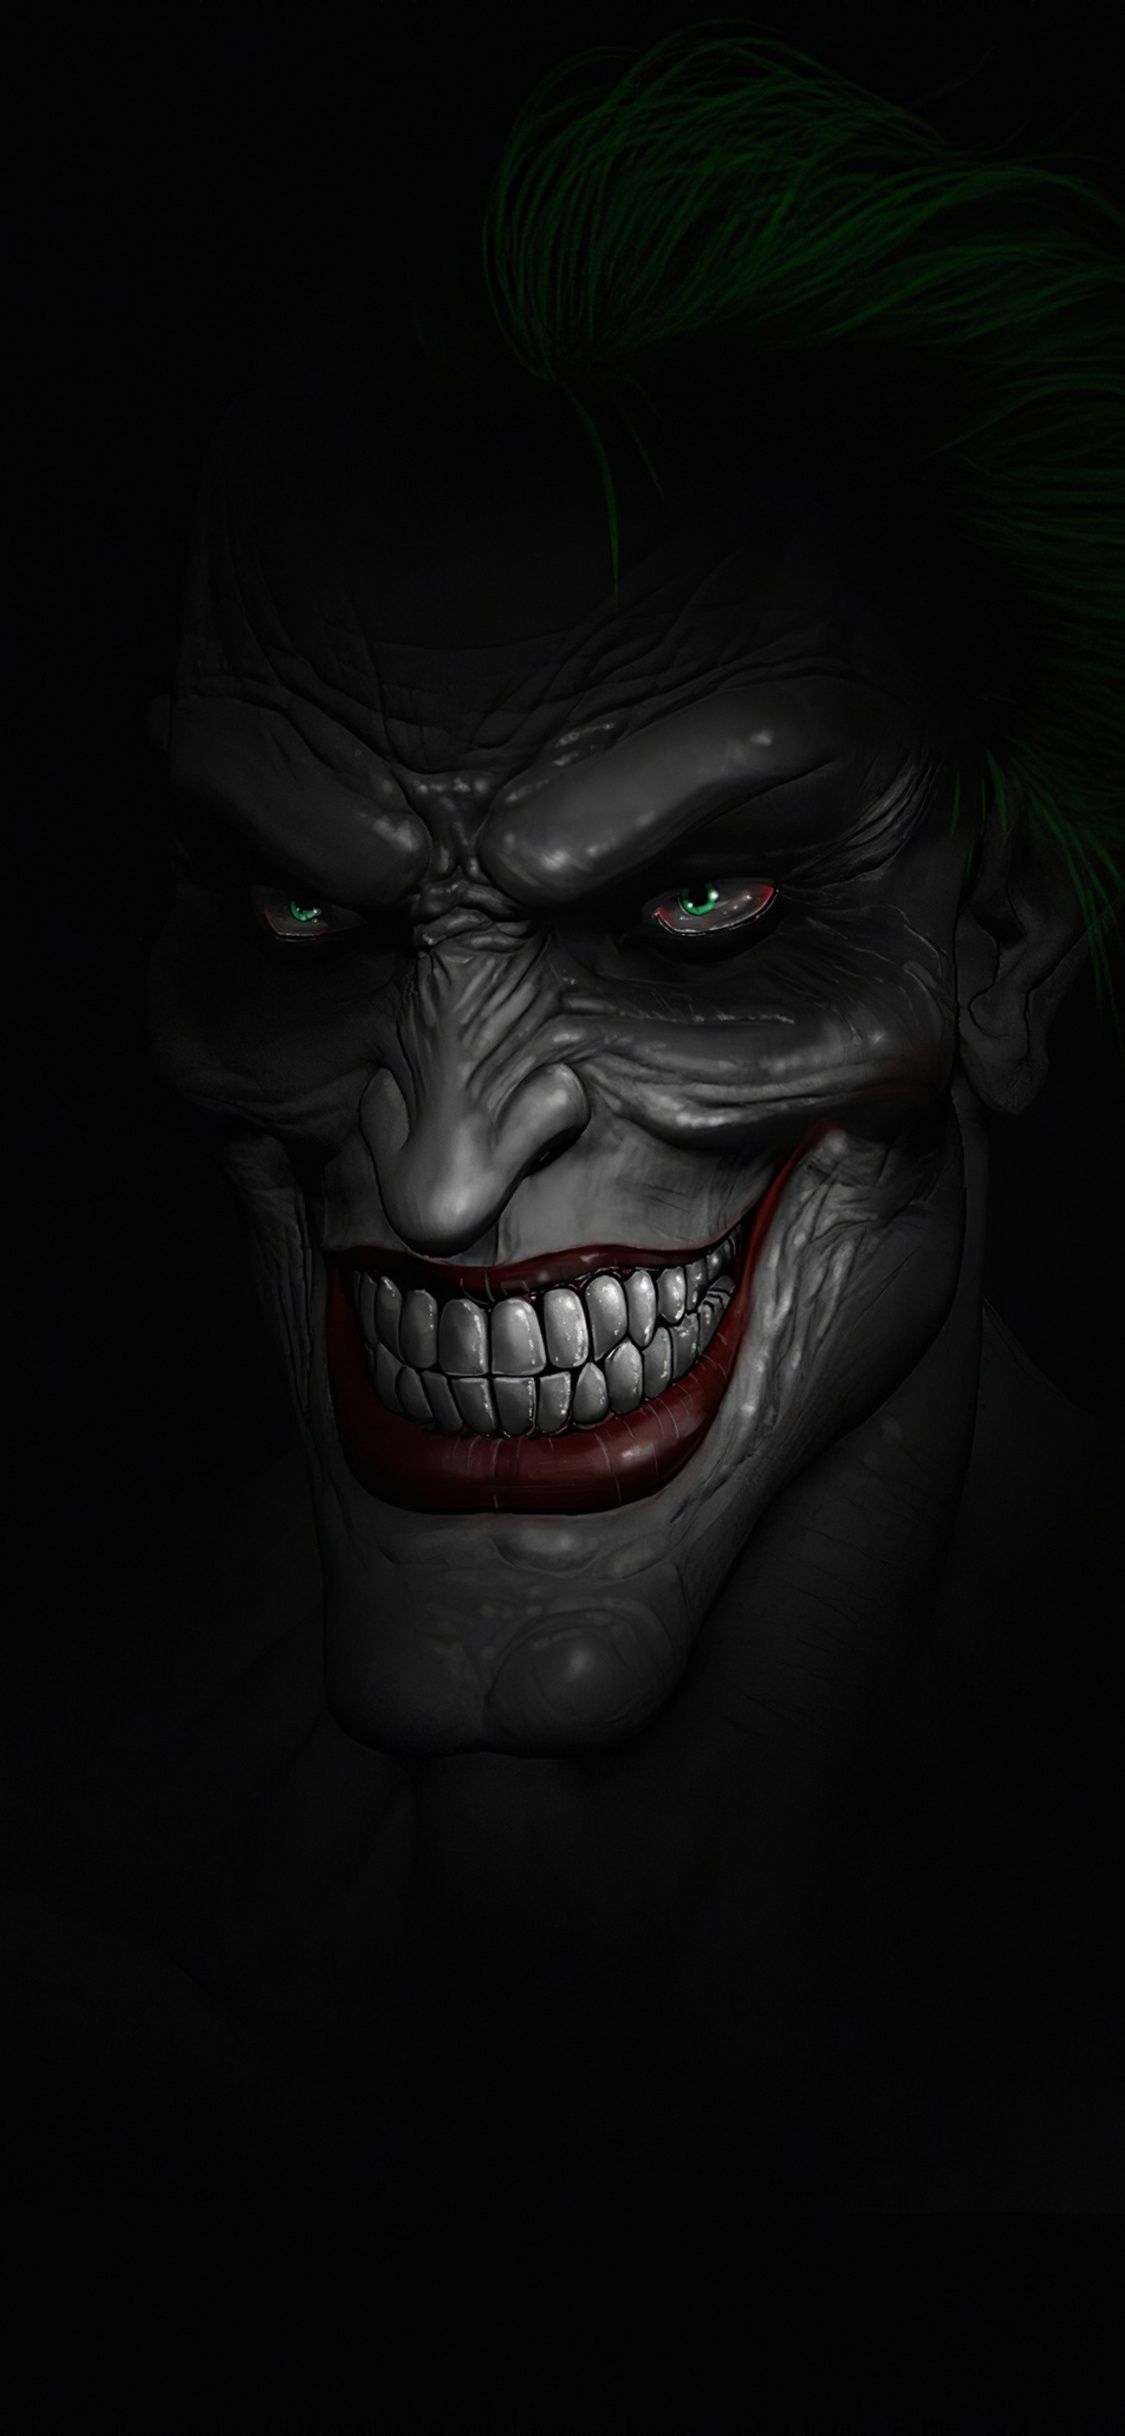 Joker Dark Minimalism 4k iPhone XS, iPhone iPhone X HD 4k Wallpaper, Image, Background, Photo and Picture